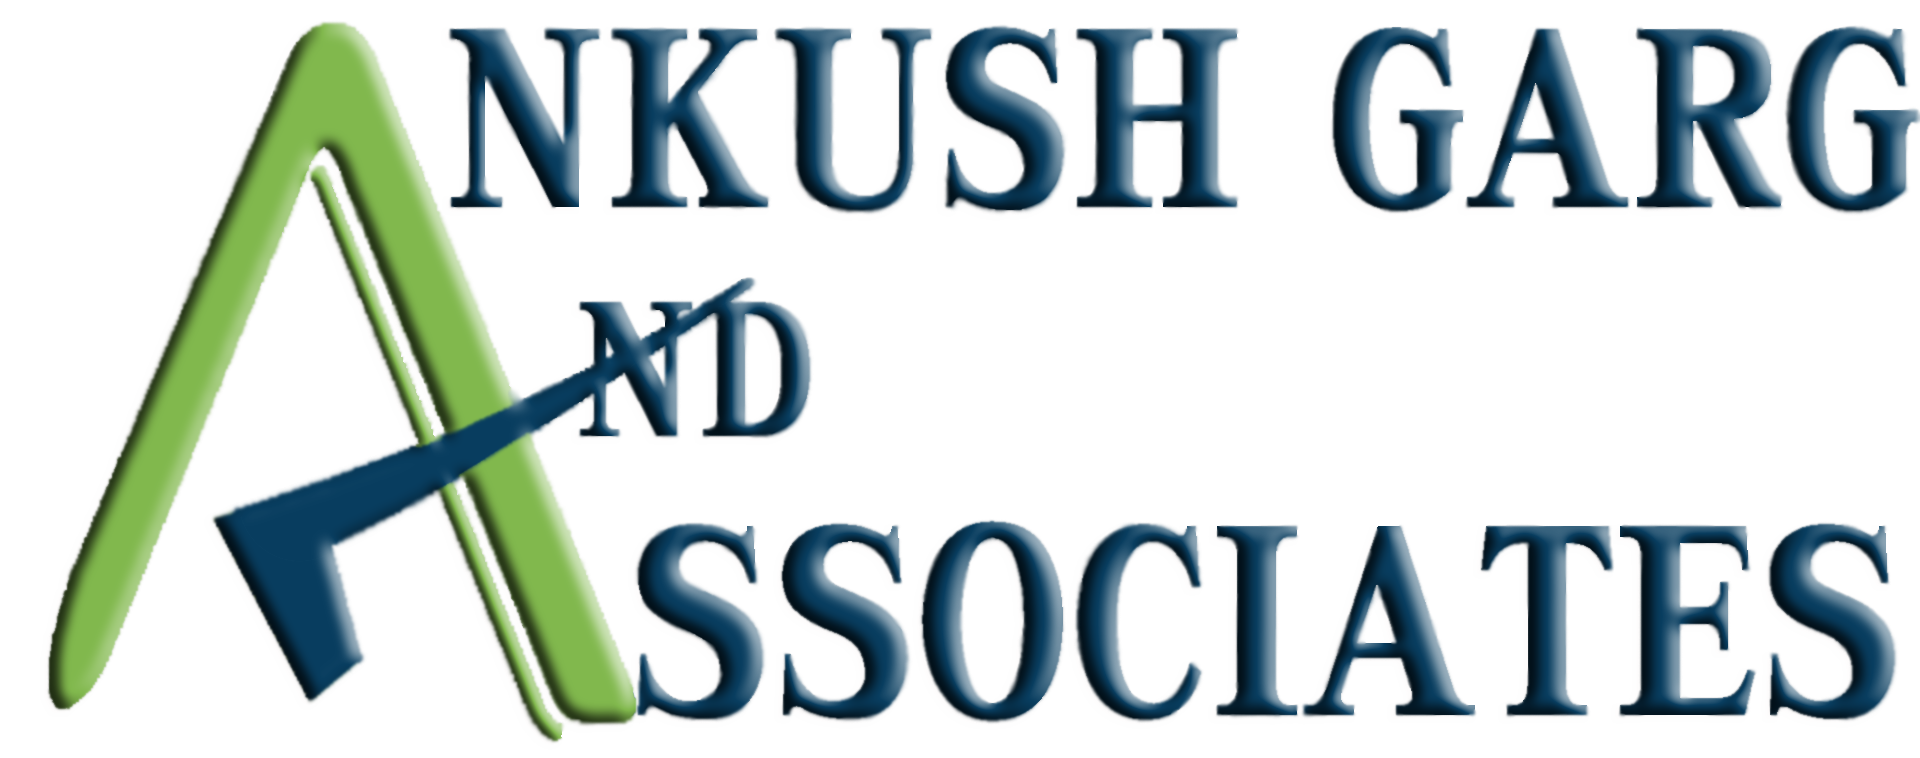 ANKUSH GARG & ASSOCIATES|Legal Services|Professional Services